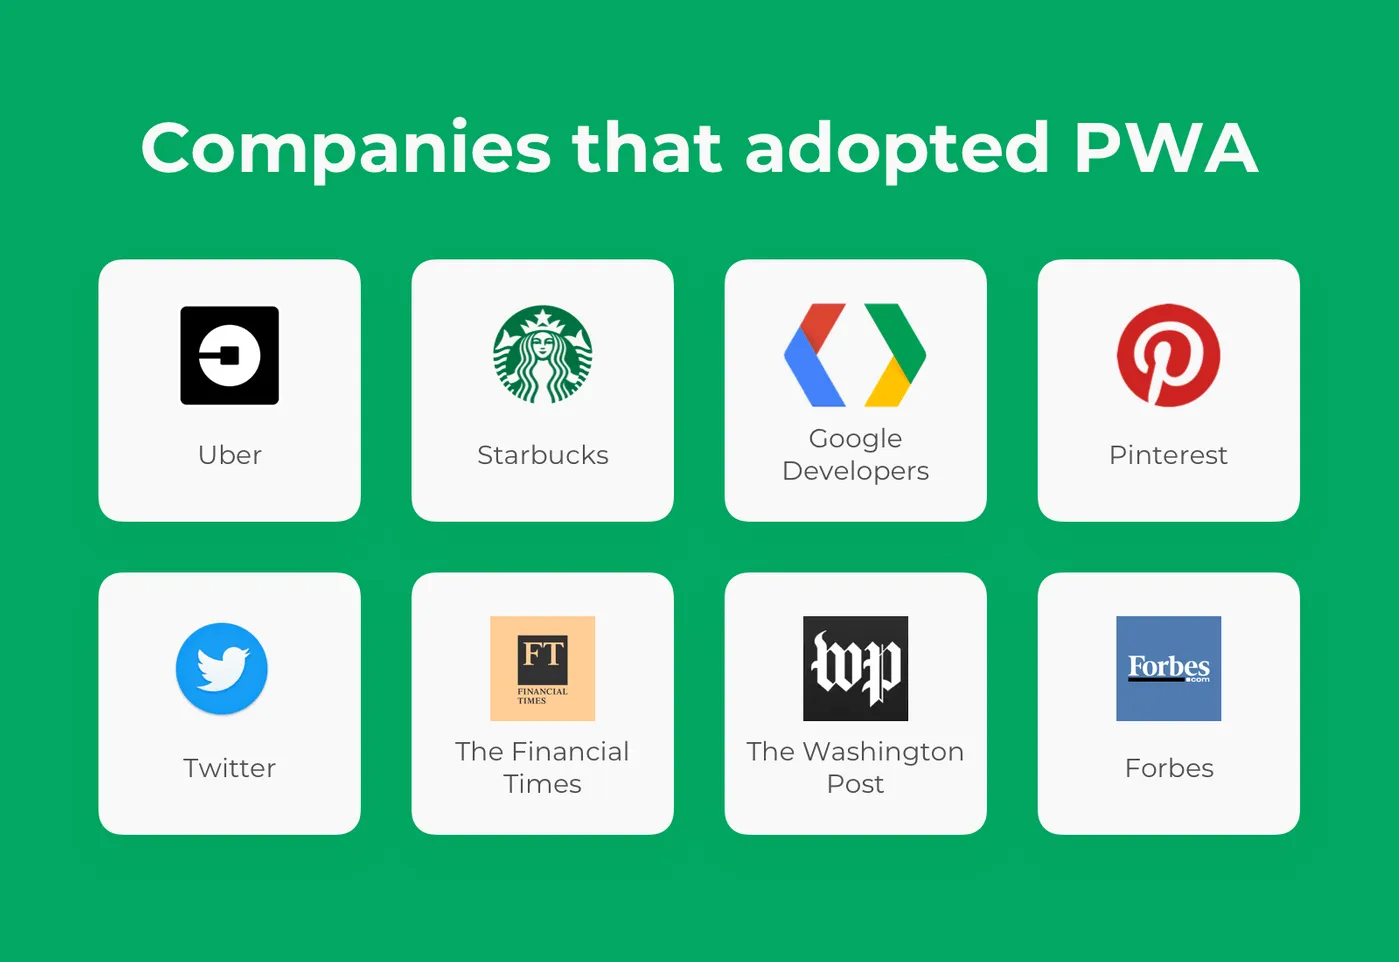 Companies that adopted PWA